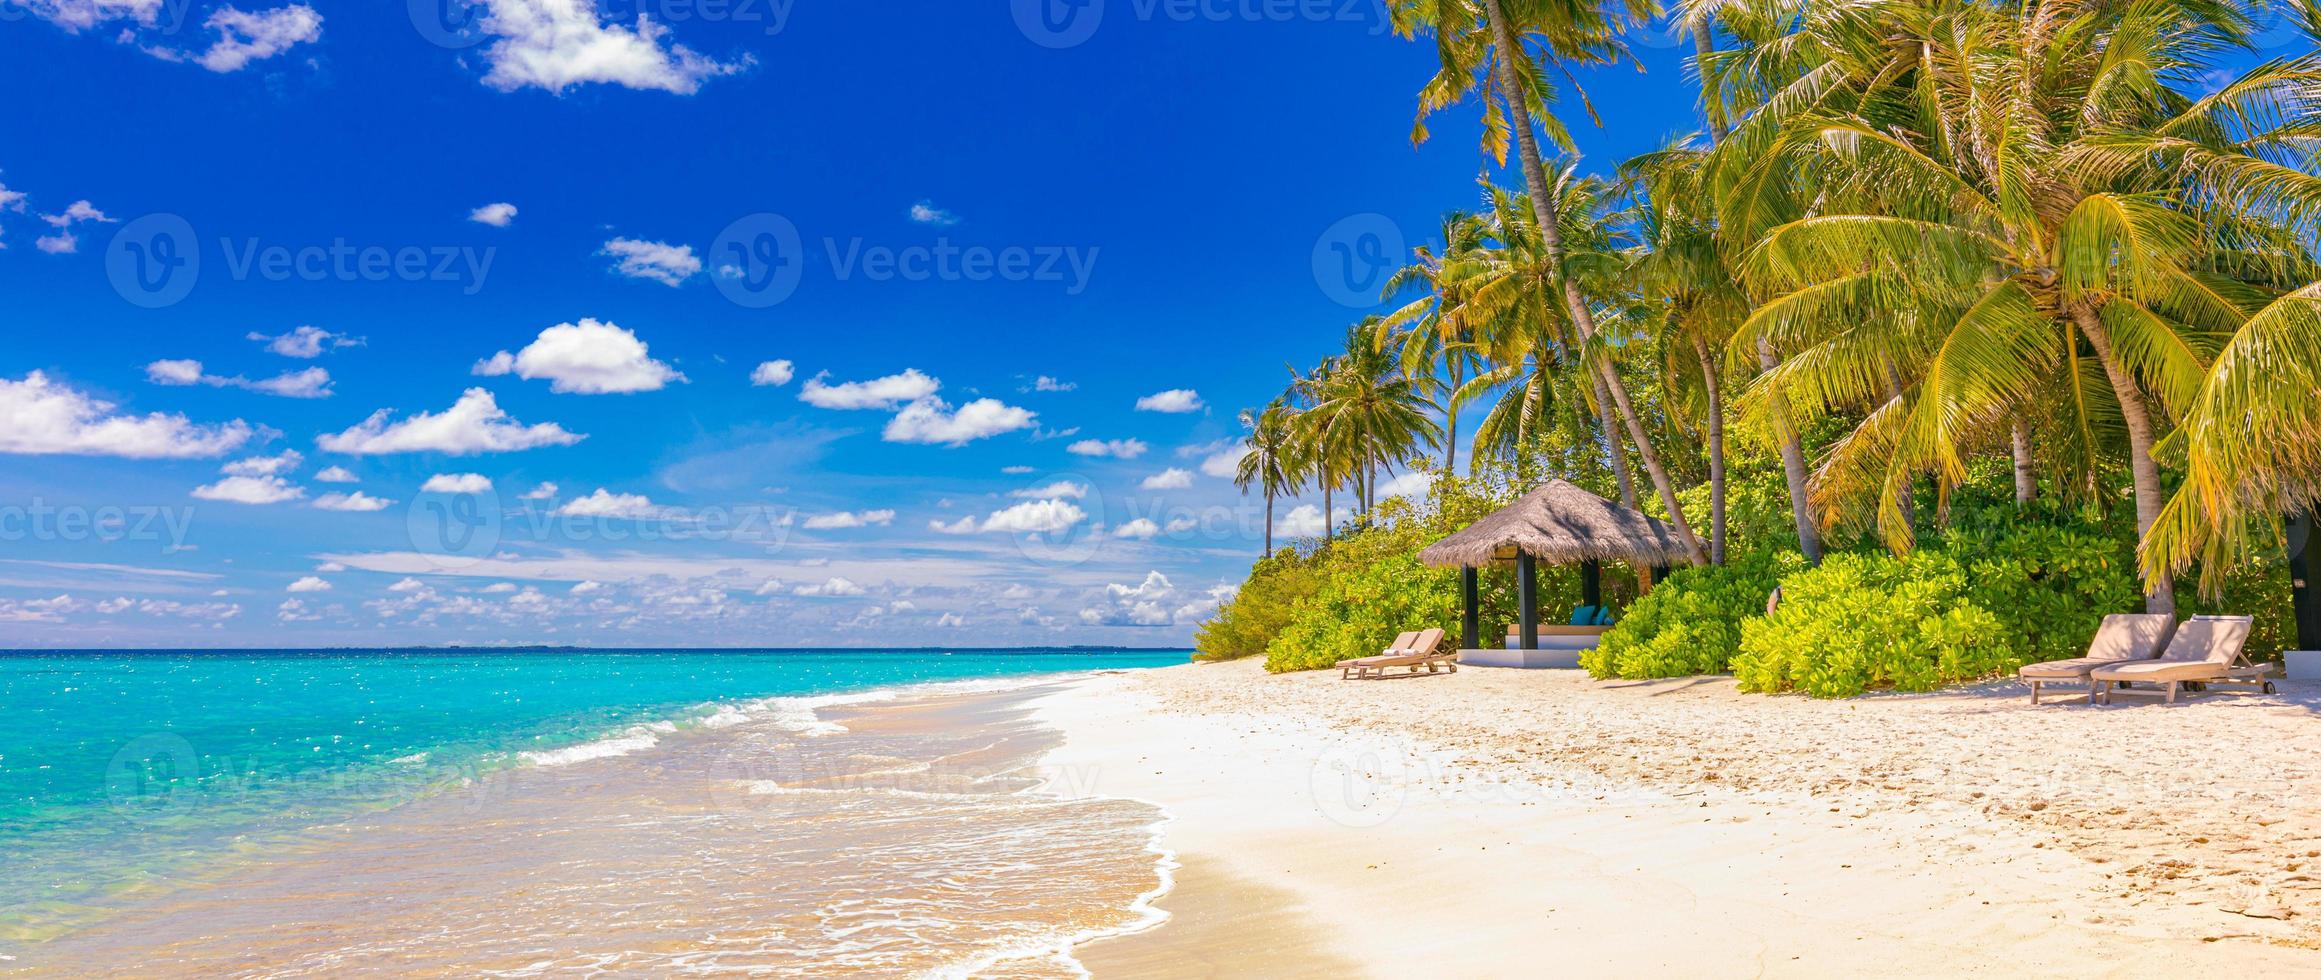 Tropical resort hotel beach paradise. Amazing nature, coast, shore. Summer vacation, travel adventure. Luxury holiday landscape, stunning ocean lagoon, blue sky palm trees. relax idyllic inspire beach photo